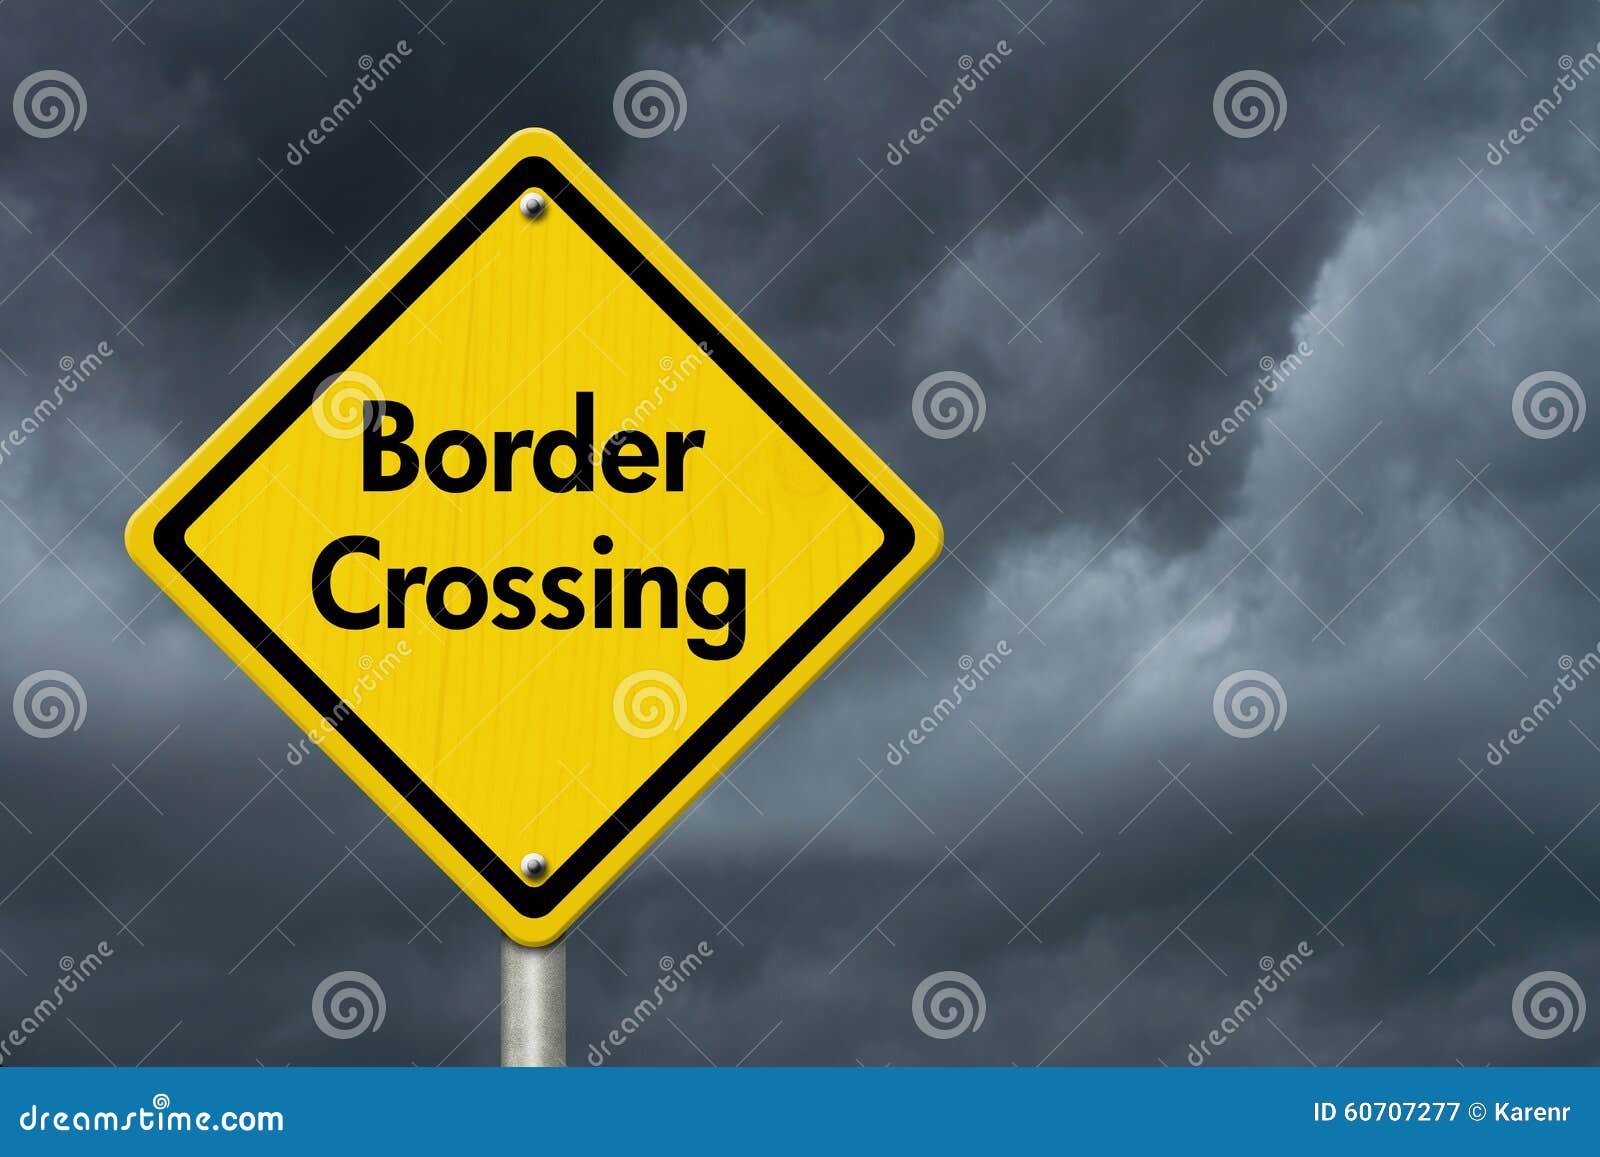 border crossing road sign